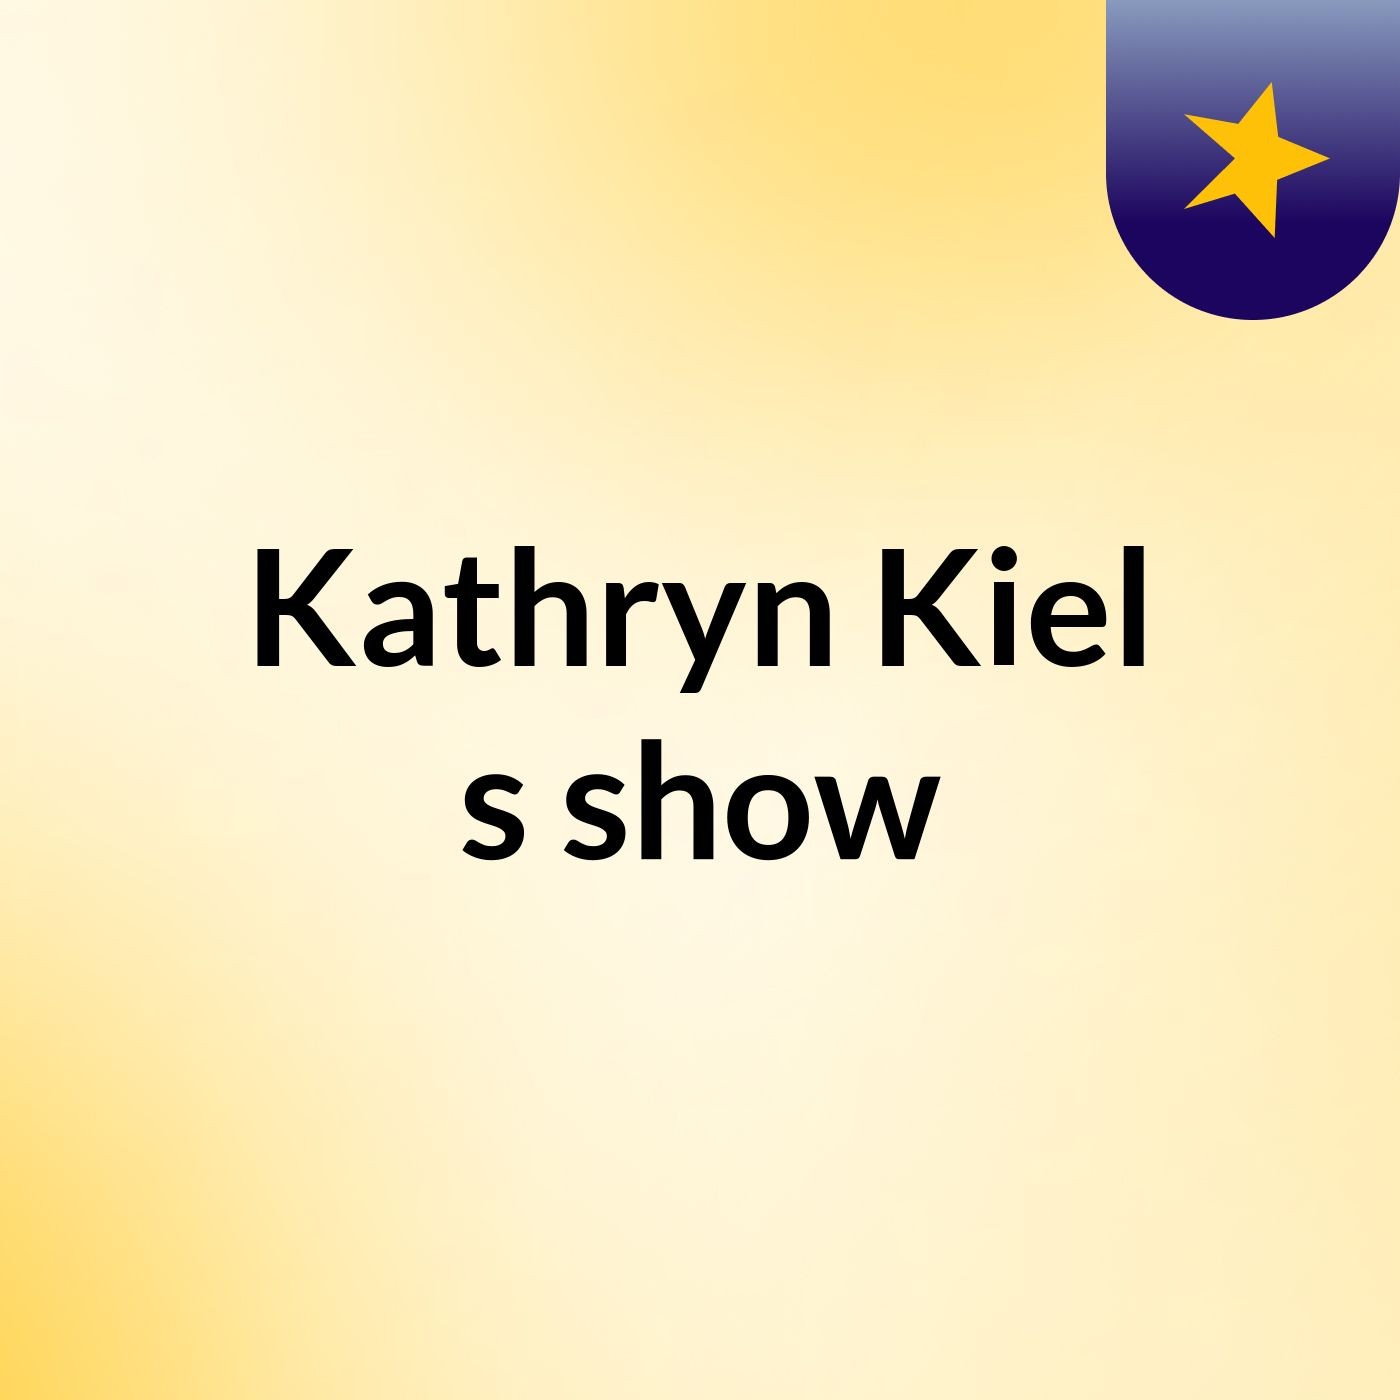 Kathryn Kiel's show